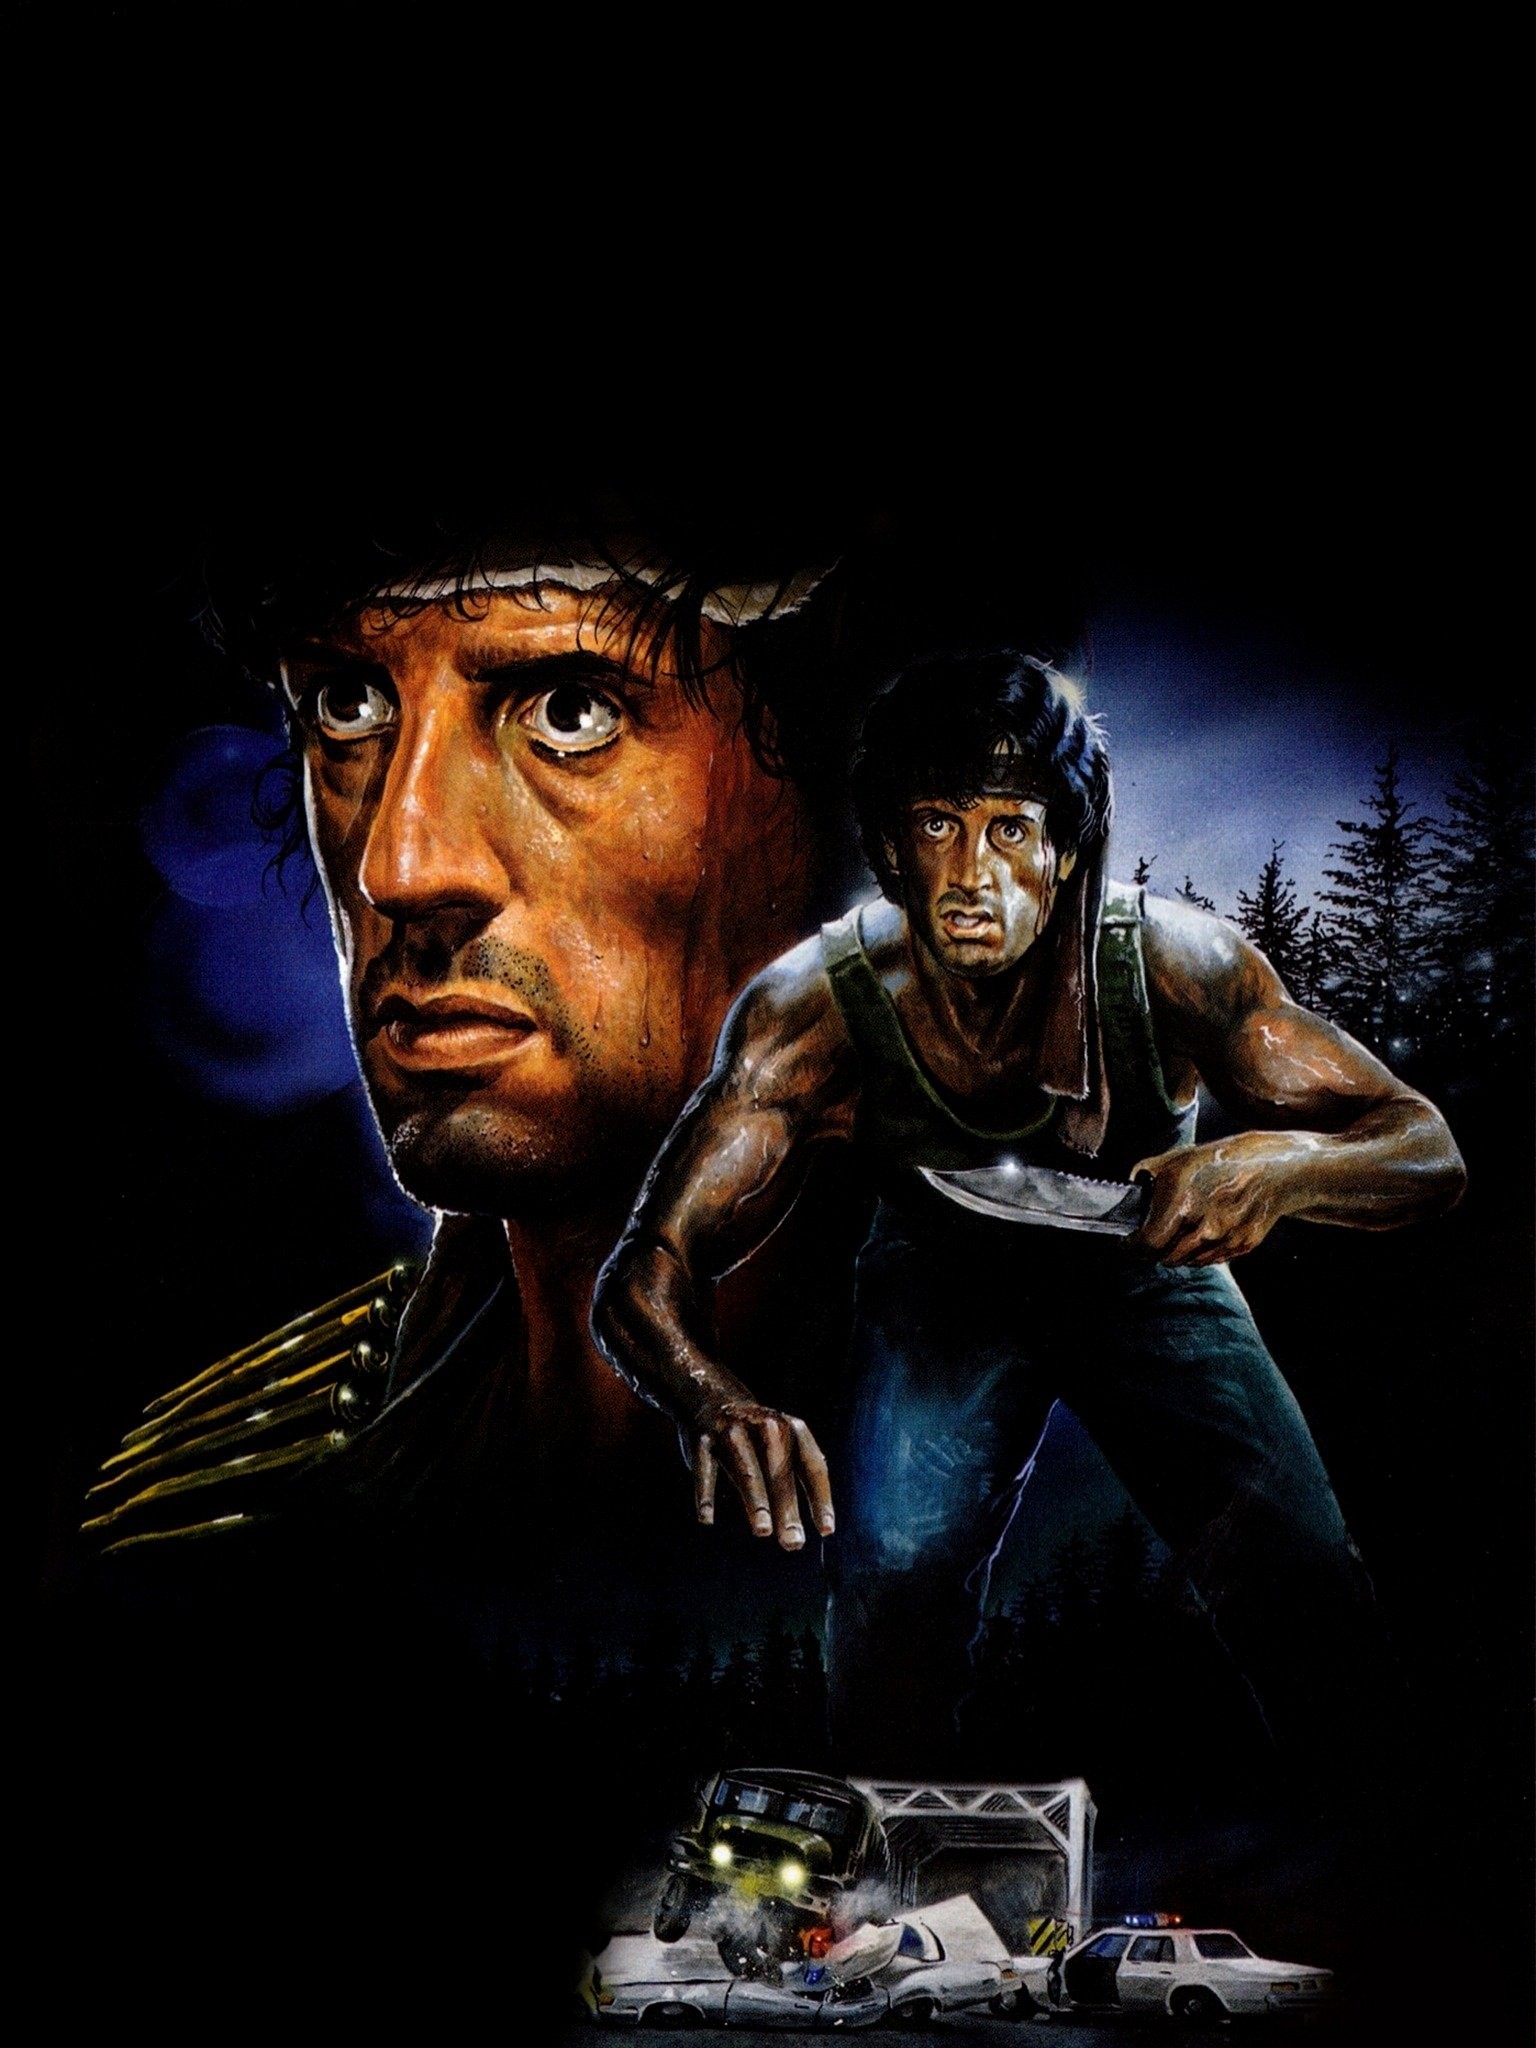 Poster do filme Rambo 3 (11 x 17)